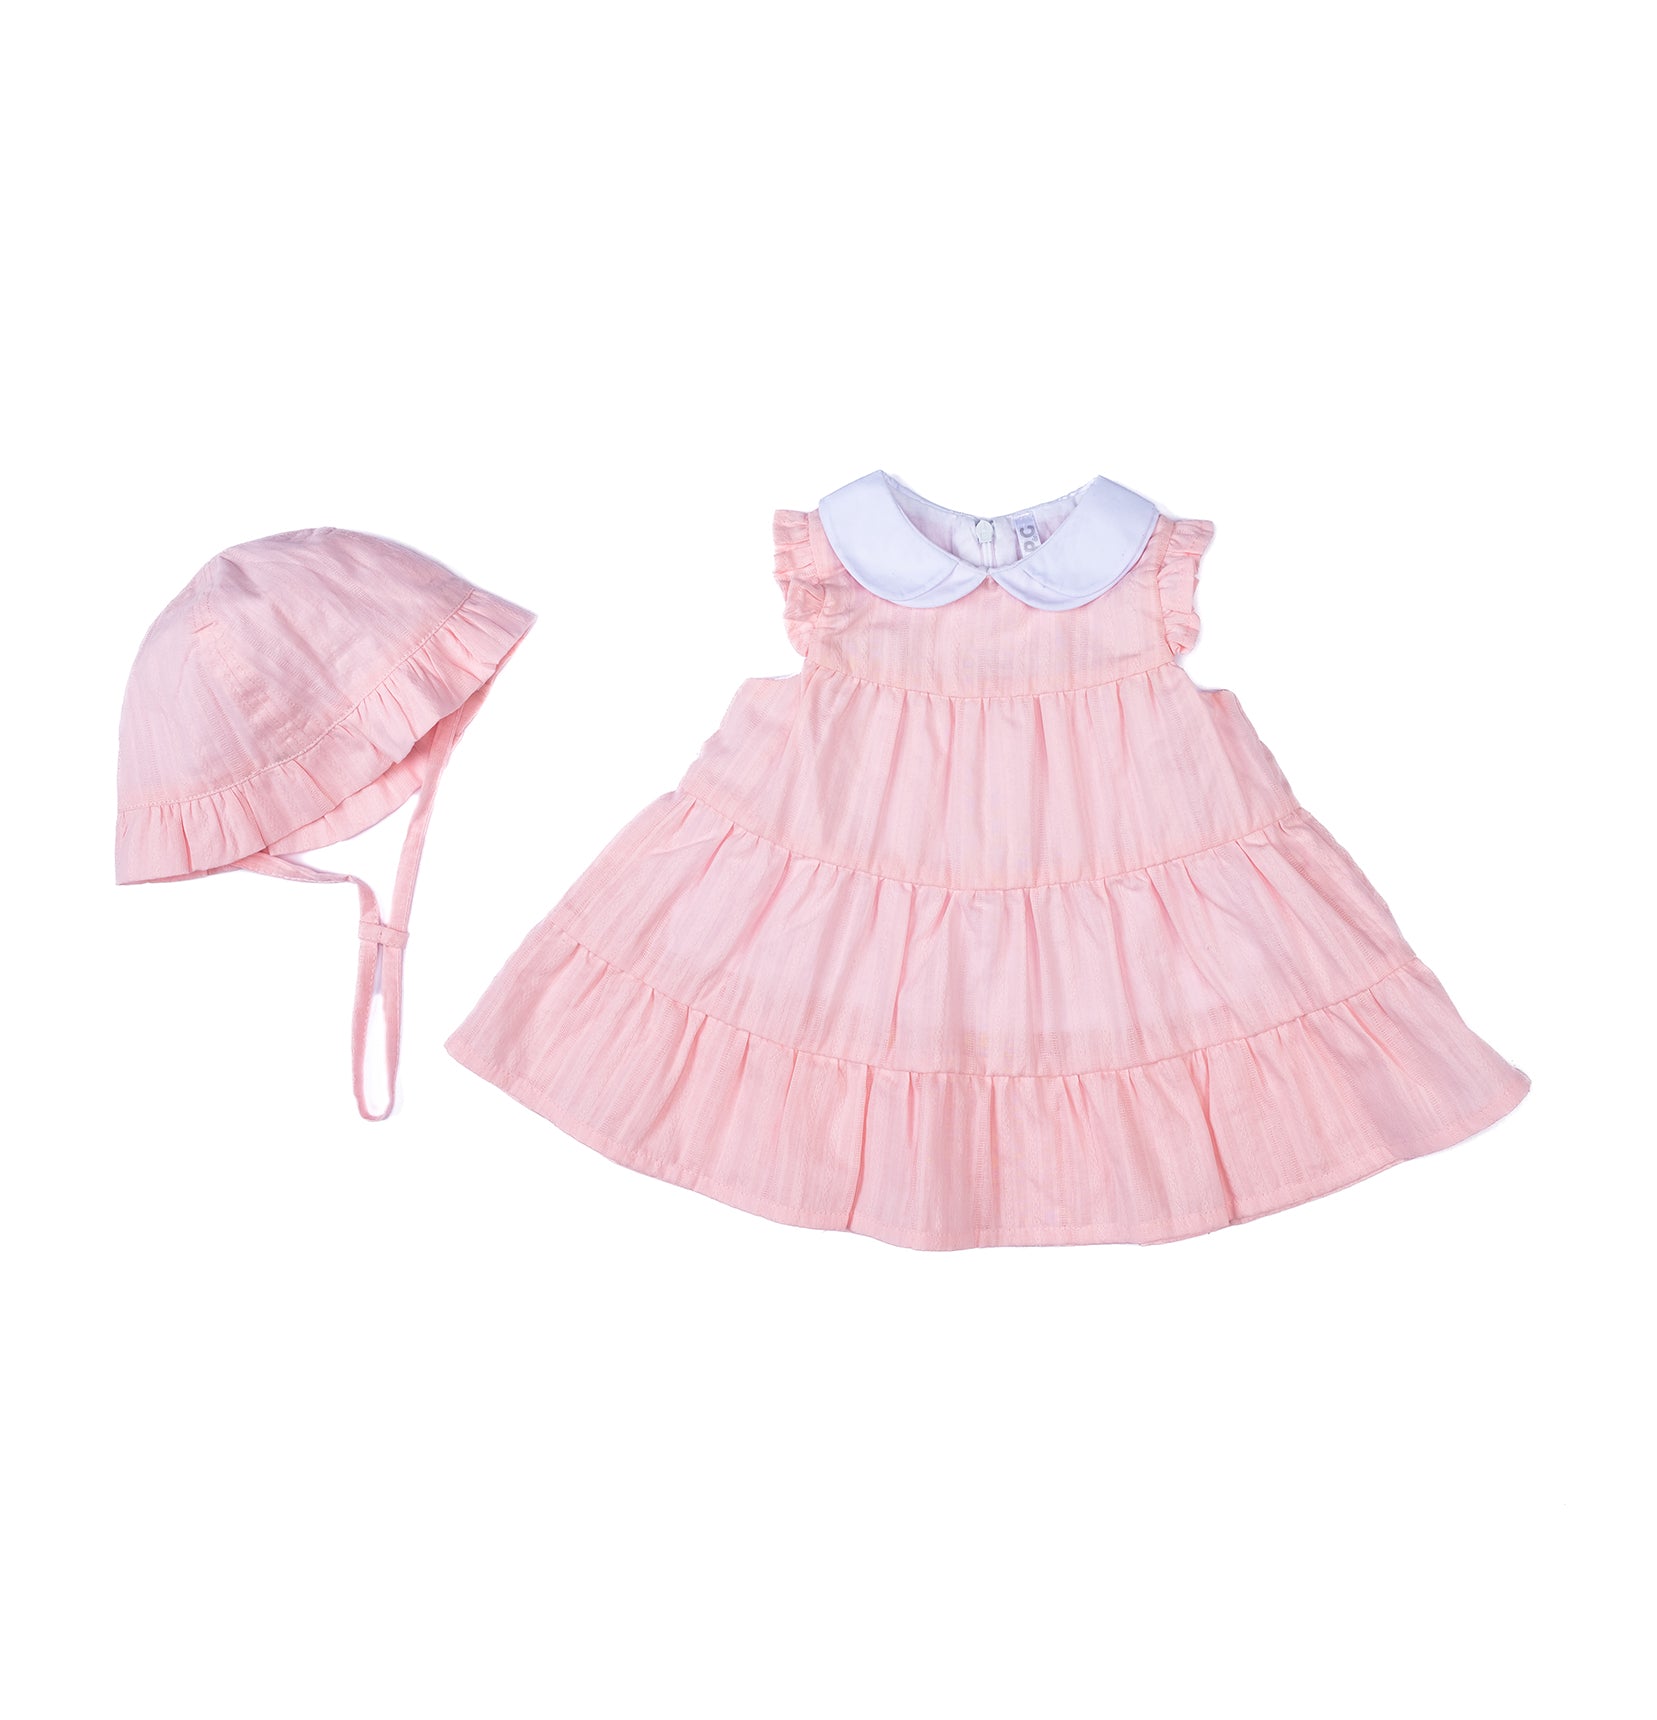 Fashionable sleeveless baby girl dress by Pompelo